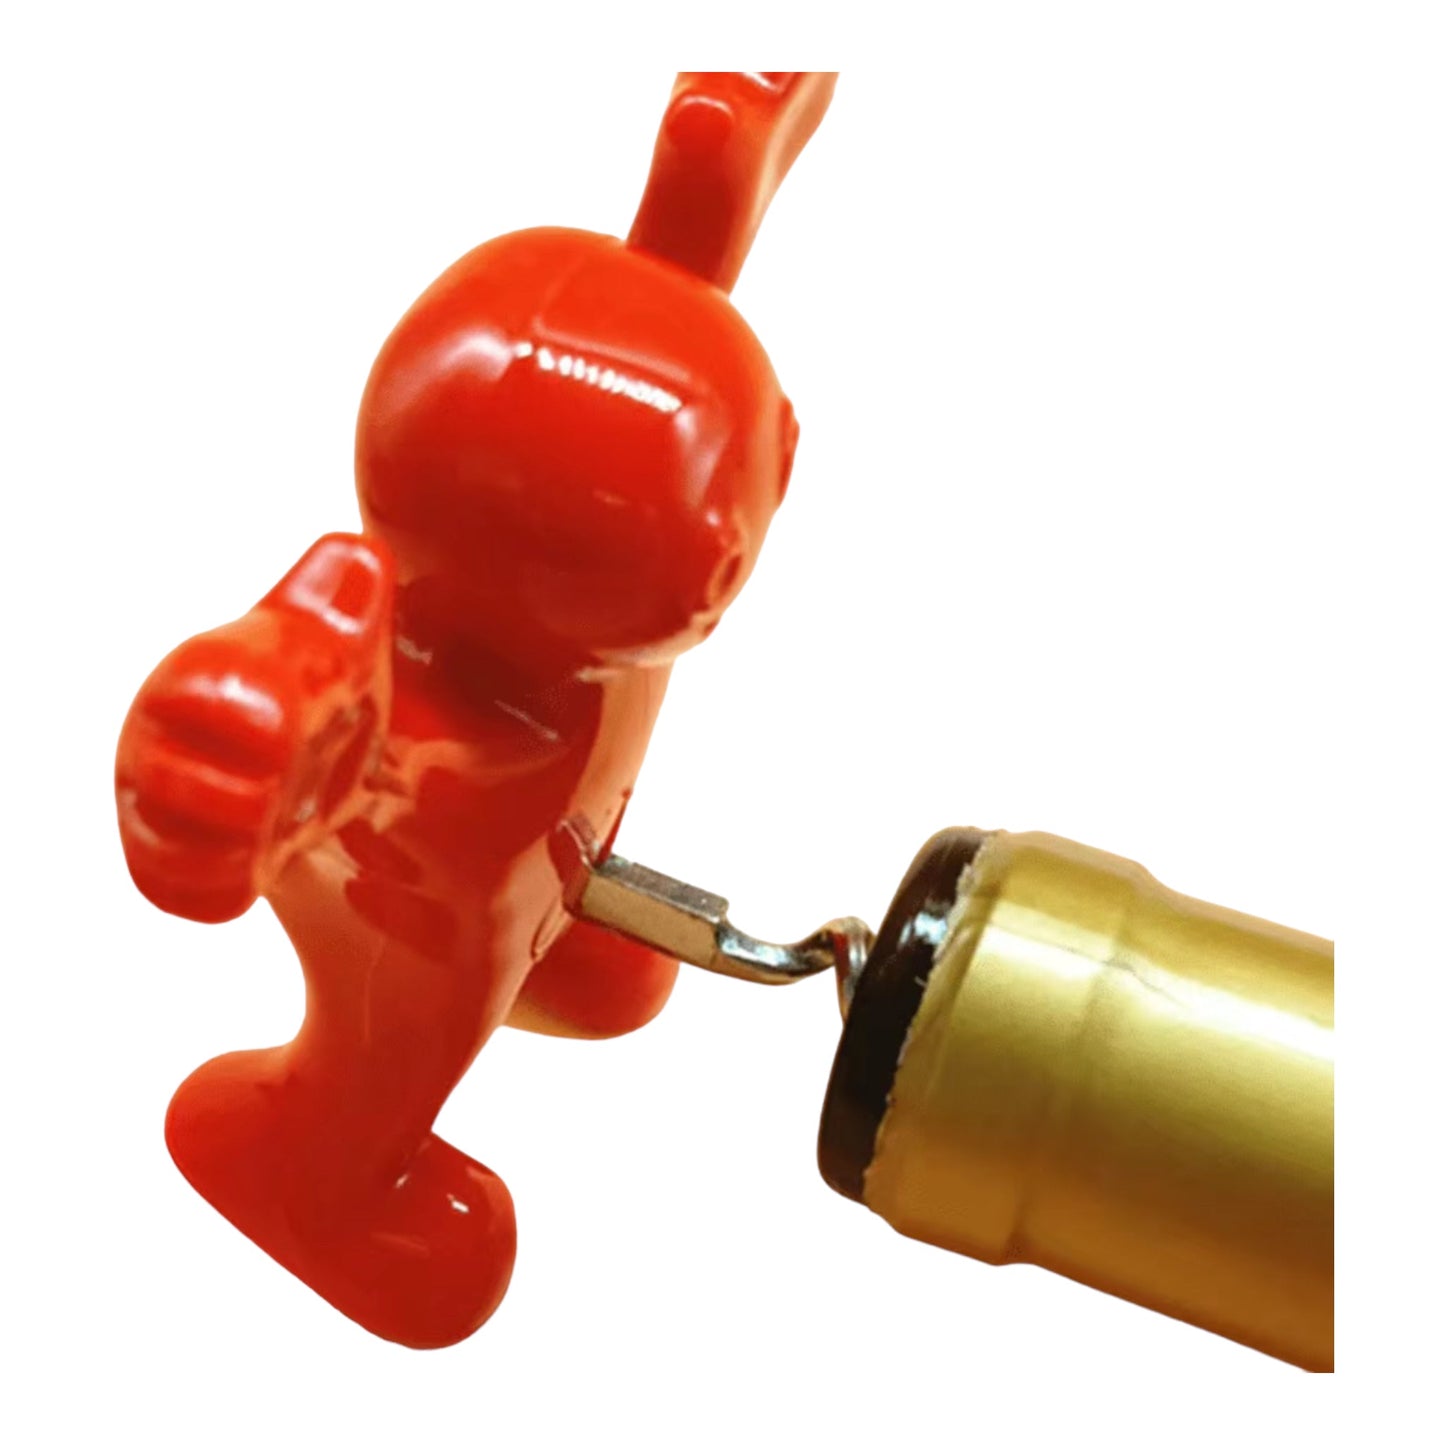 Kinky Pleasure - T014 - Man With Penis As Bottle Opener - 3 Models - Red